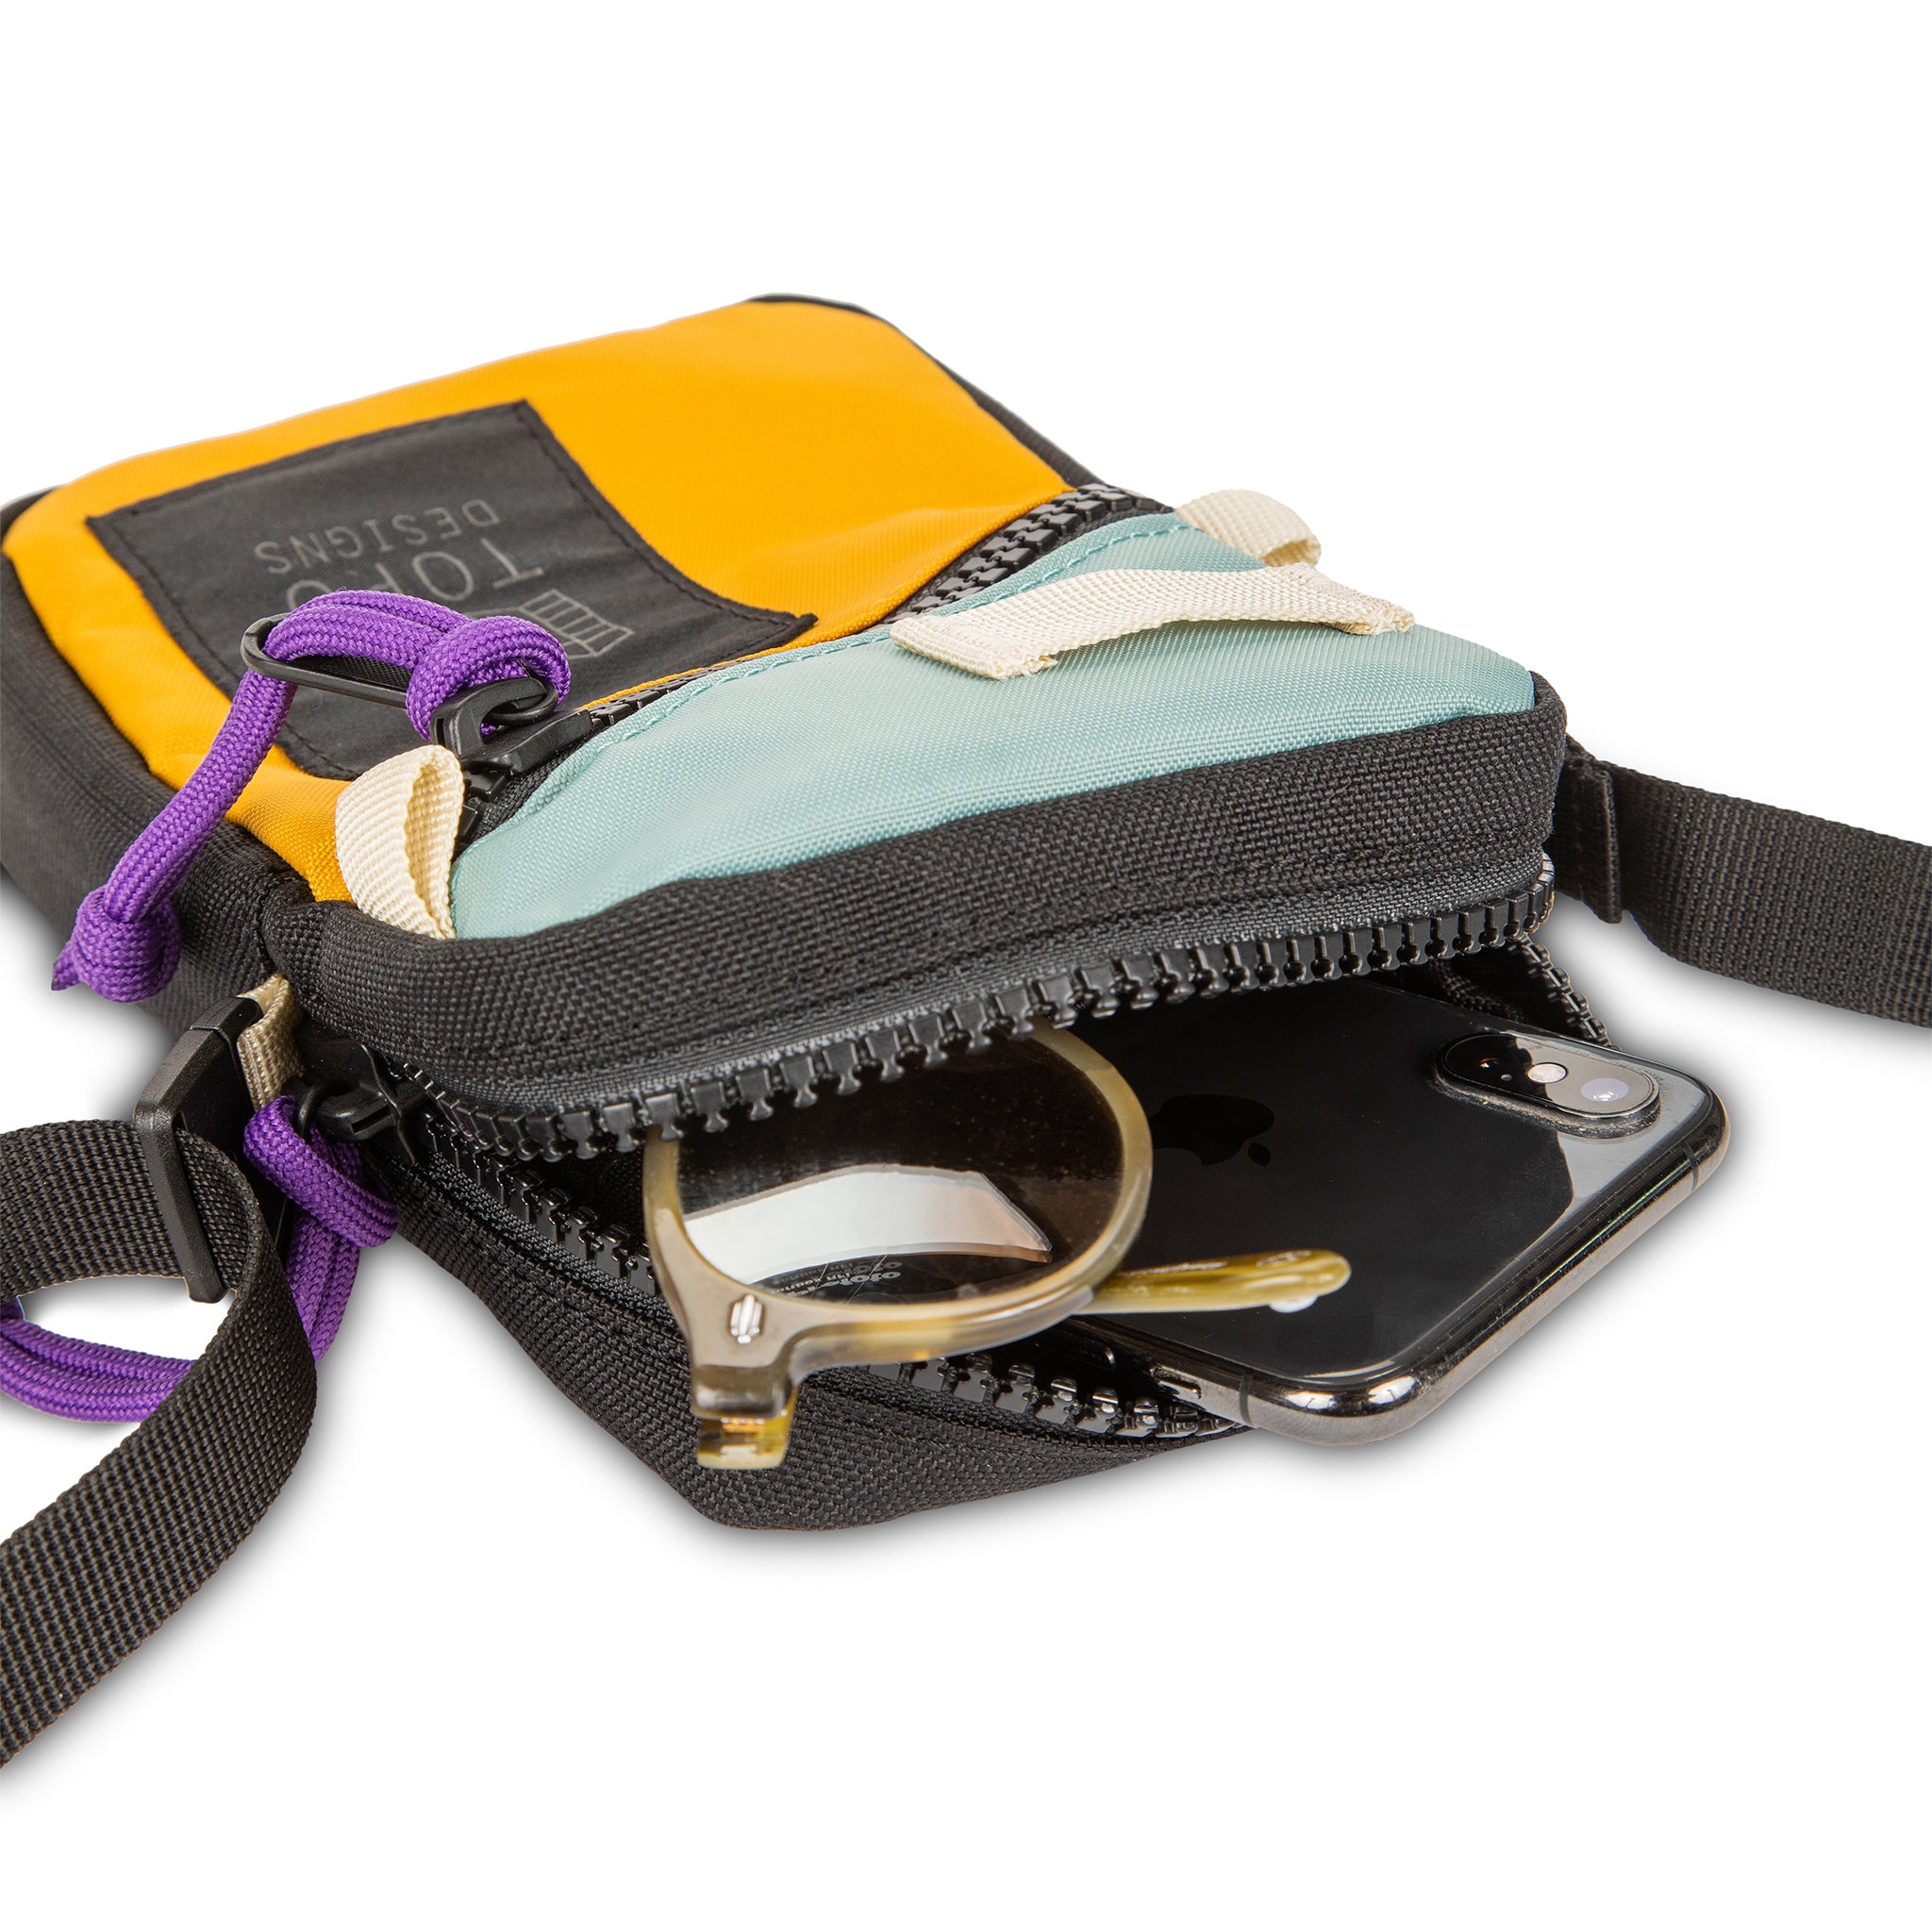 Topo Designs Mini Shoulder Bag Review